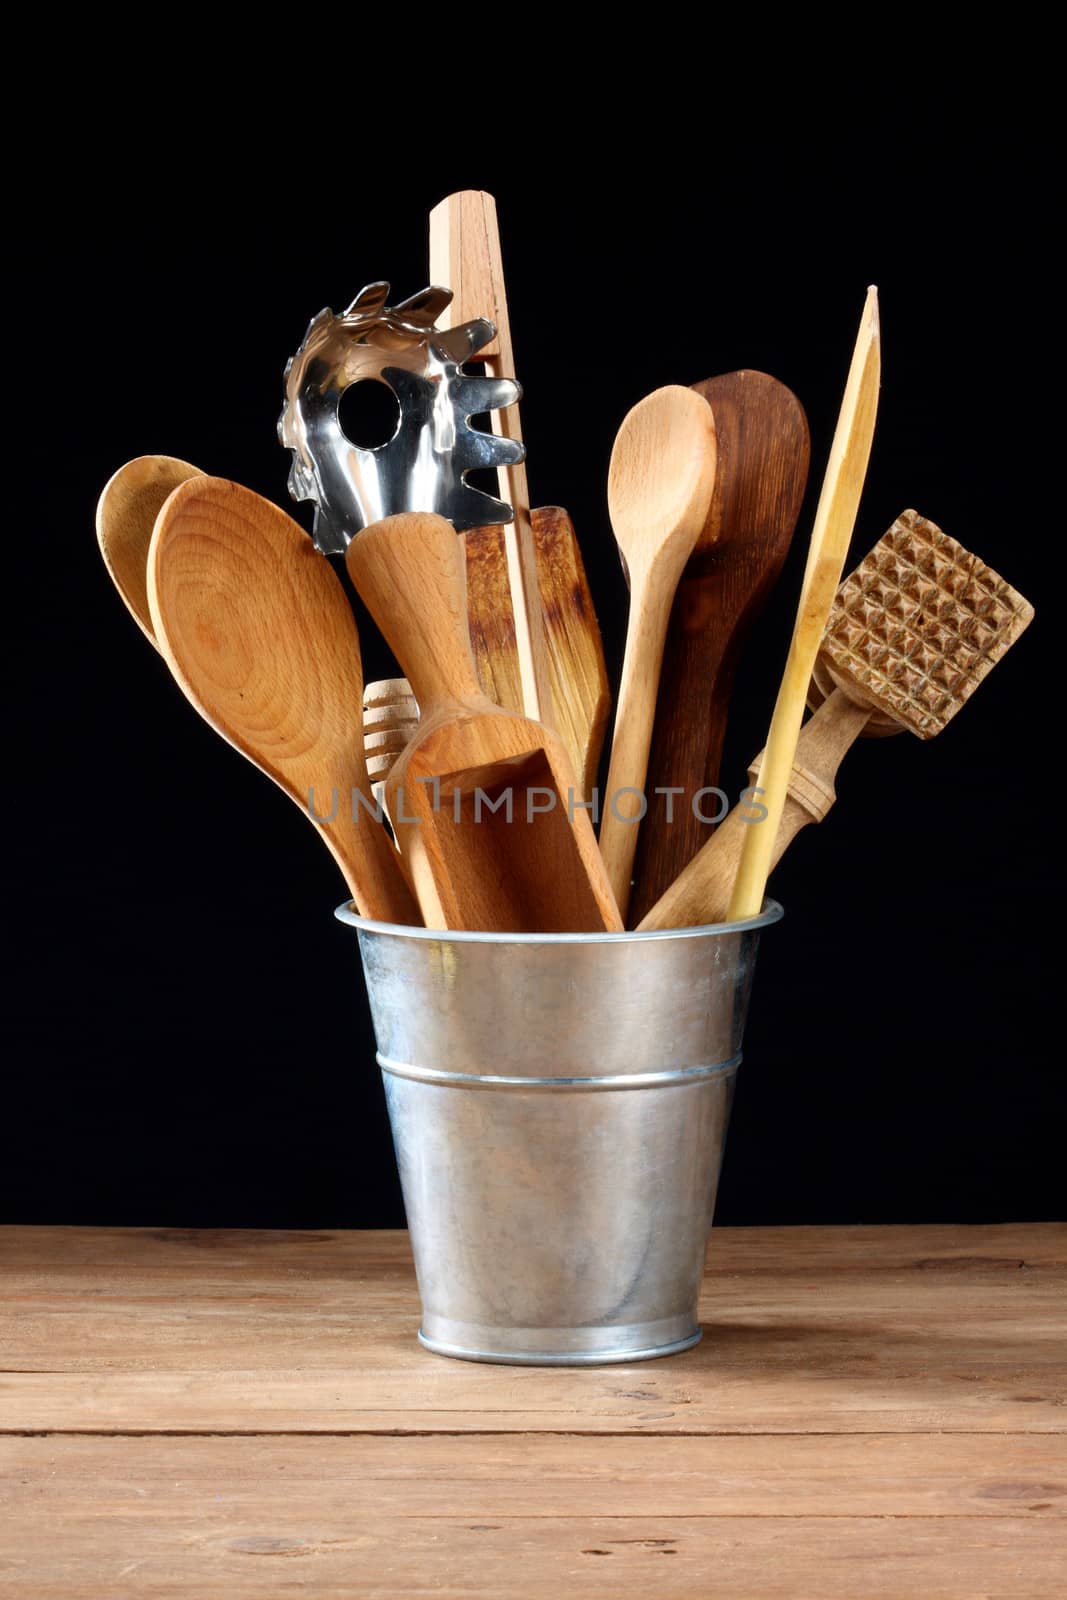  kitchen utensils by alexkosev